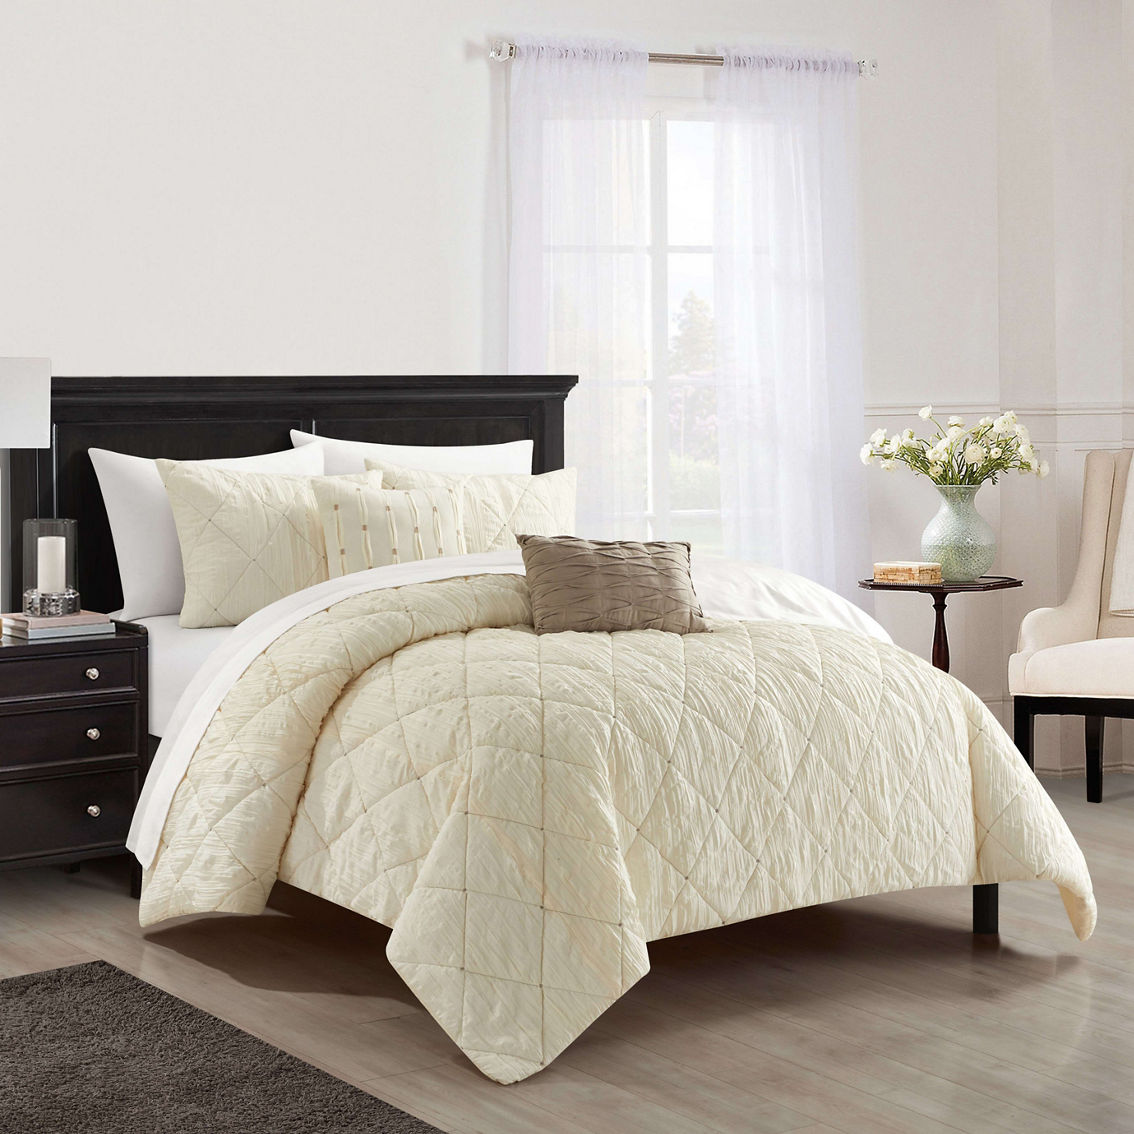 NY&C Home Leighton 9pc Comforter Set - Image 2 of 4